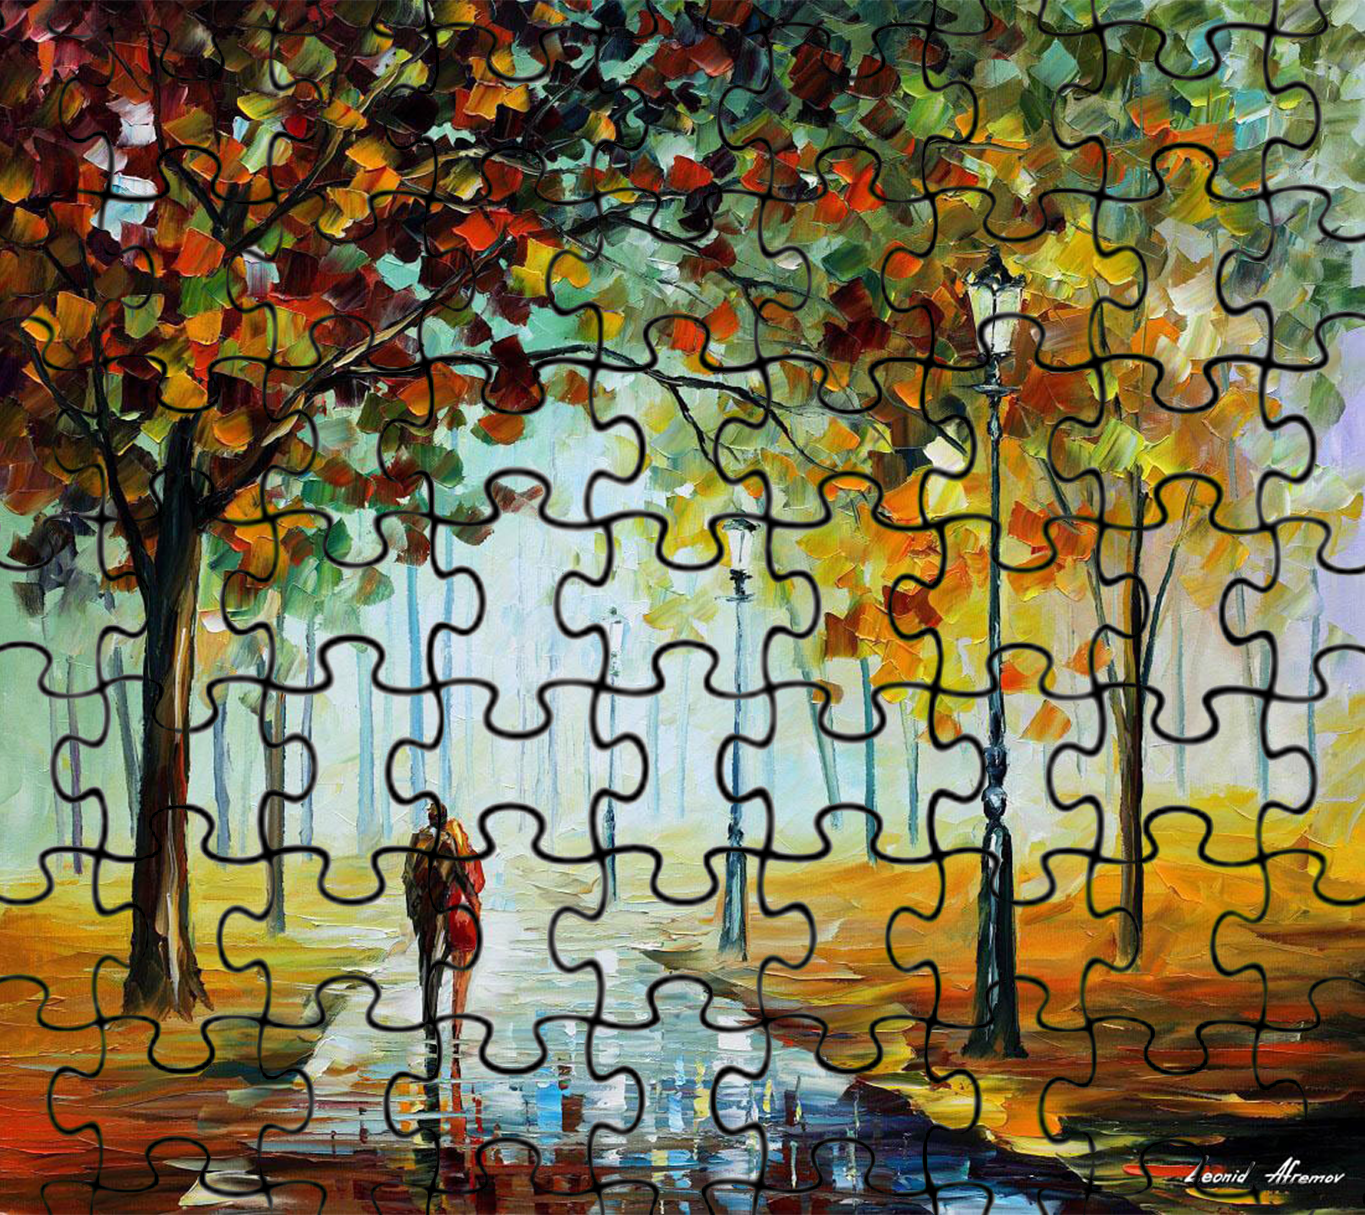 Leonid Afremov  FALL LOVE Puzzle Painting